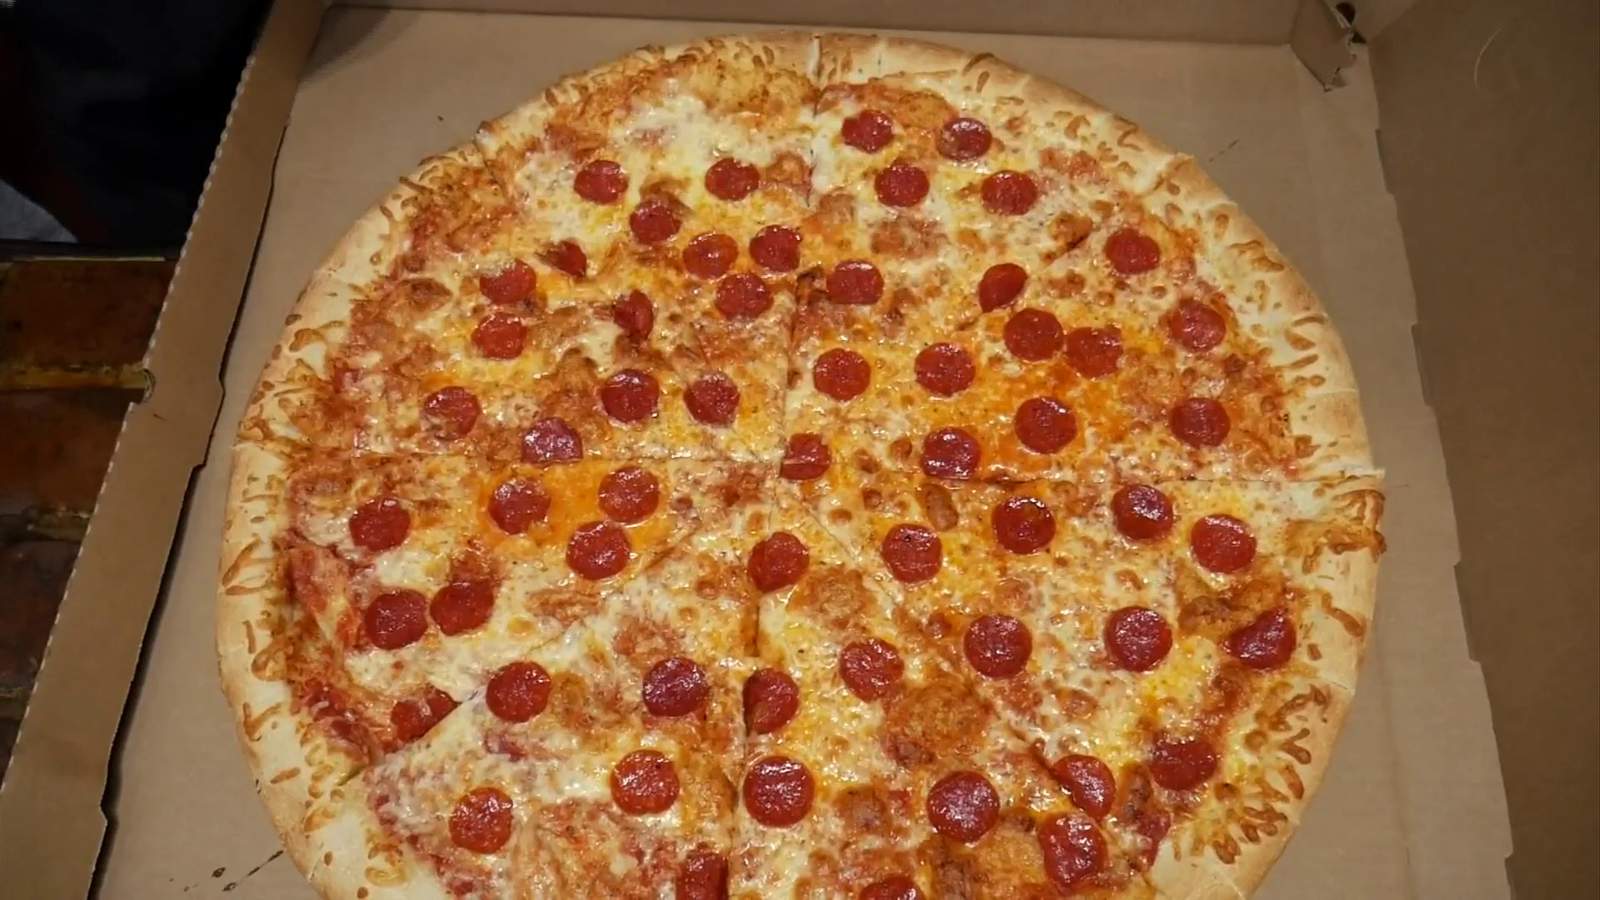 Tasty Tuesday: Benny’s keeps 28” pizza popular across southwest Virginia